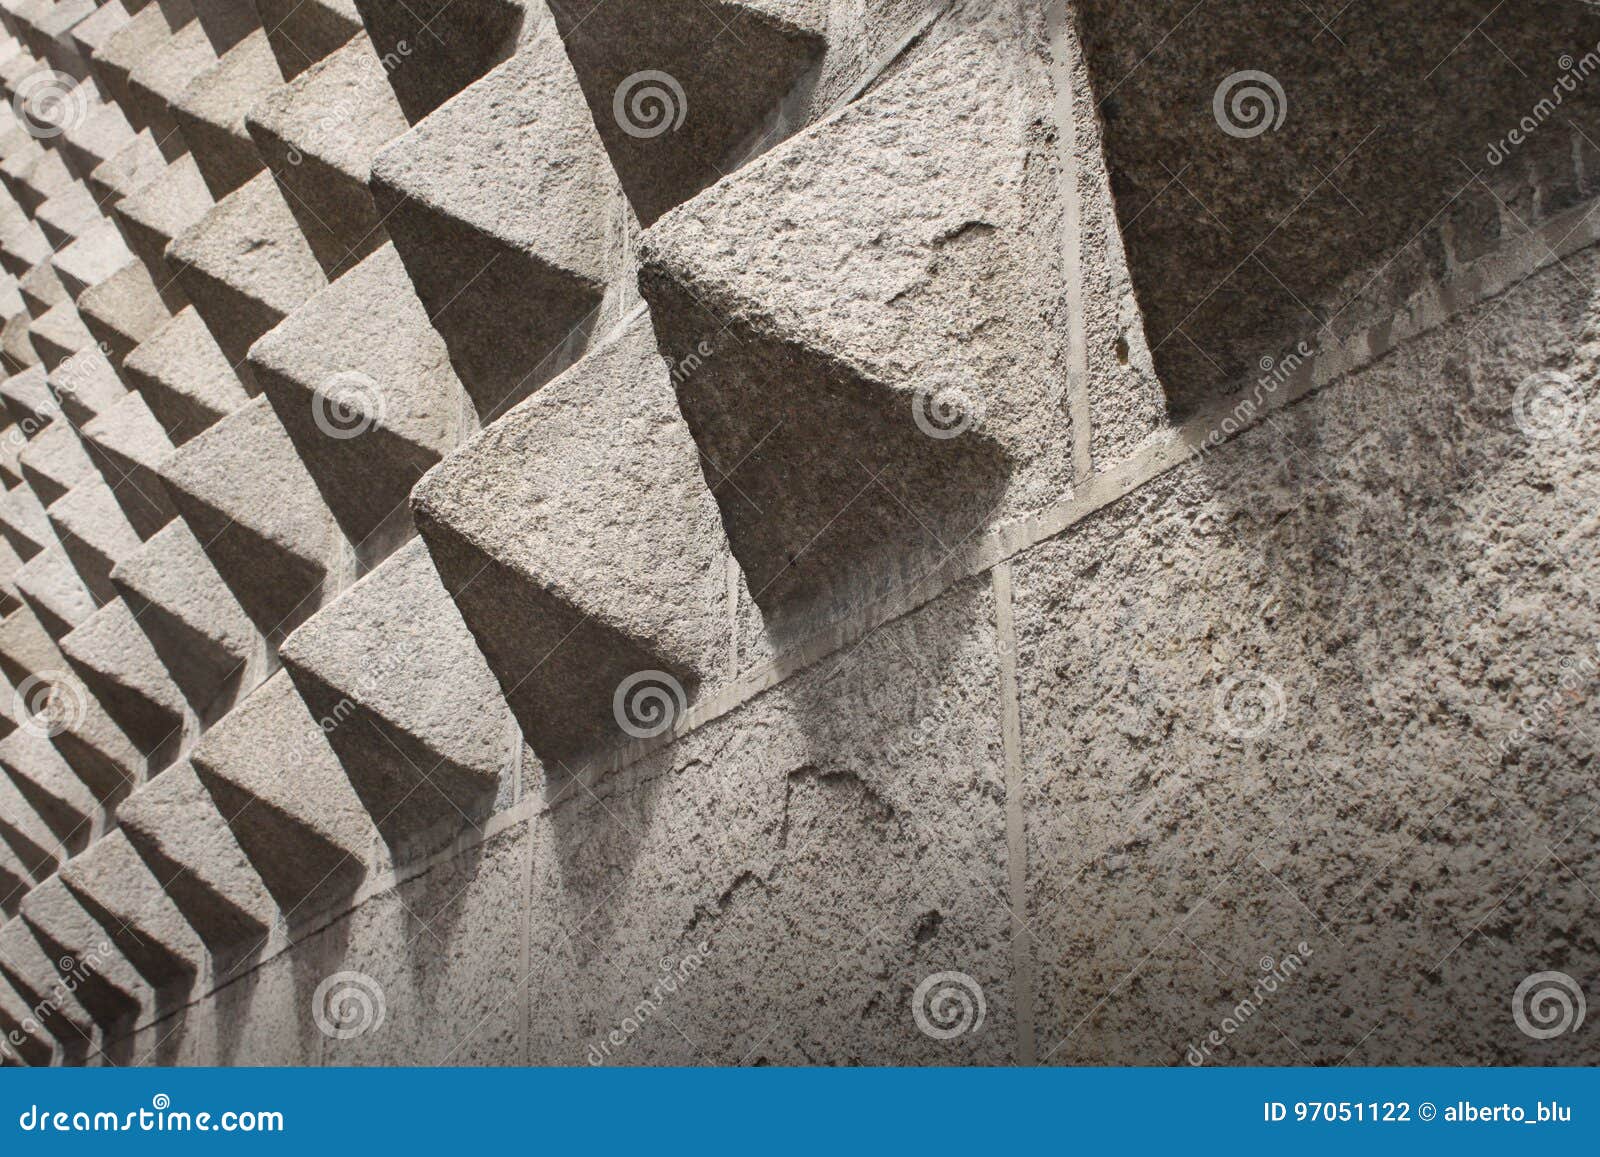 stone pyramid pattern on casa de los picos fachade in segovia, s